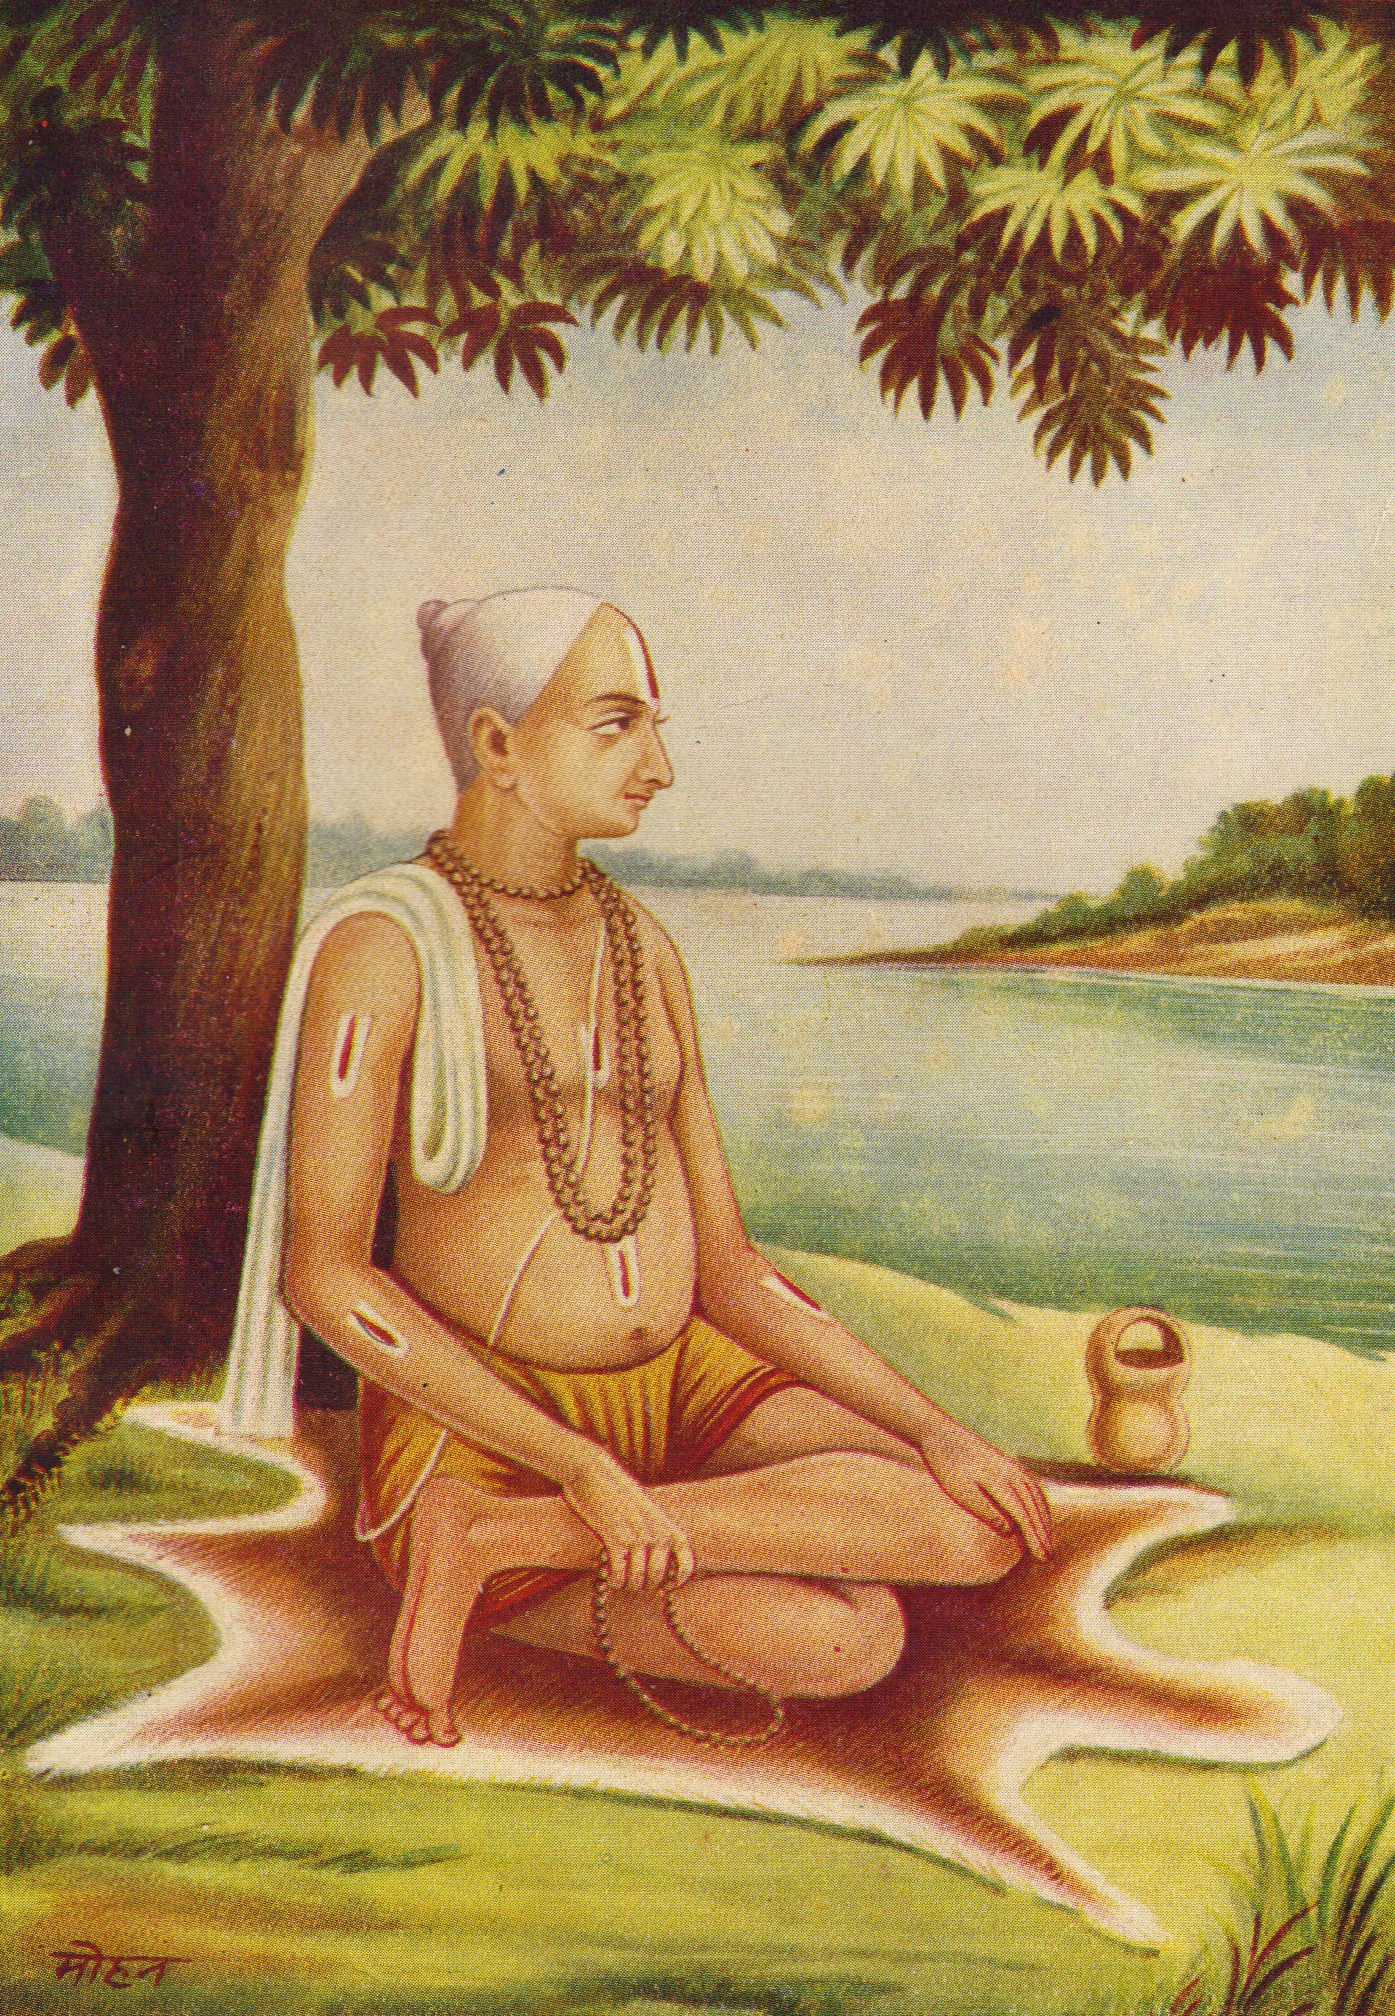 Tulsidas: The Poet Who Composed the Beloved Hanuman Chalisa